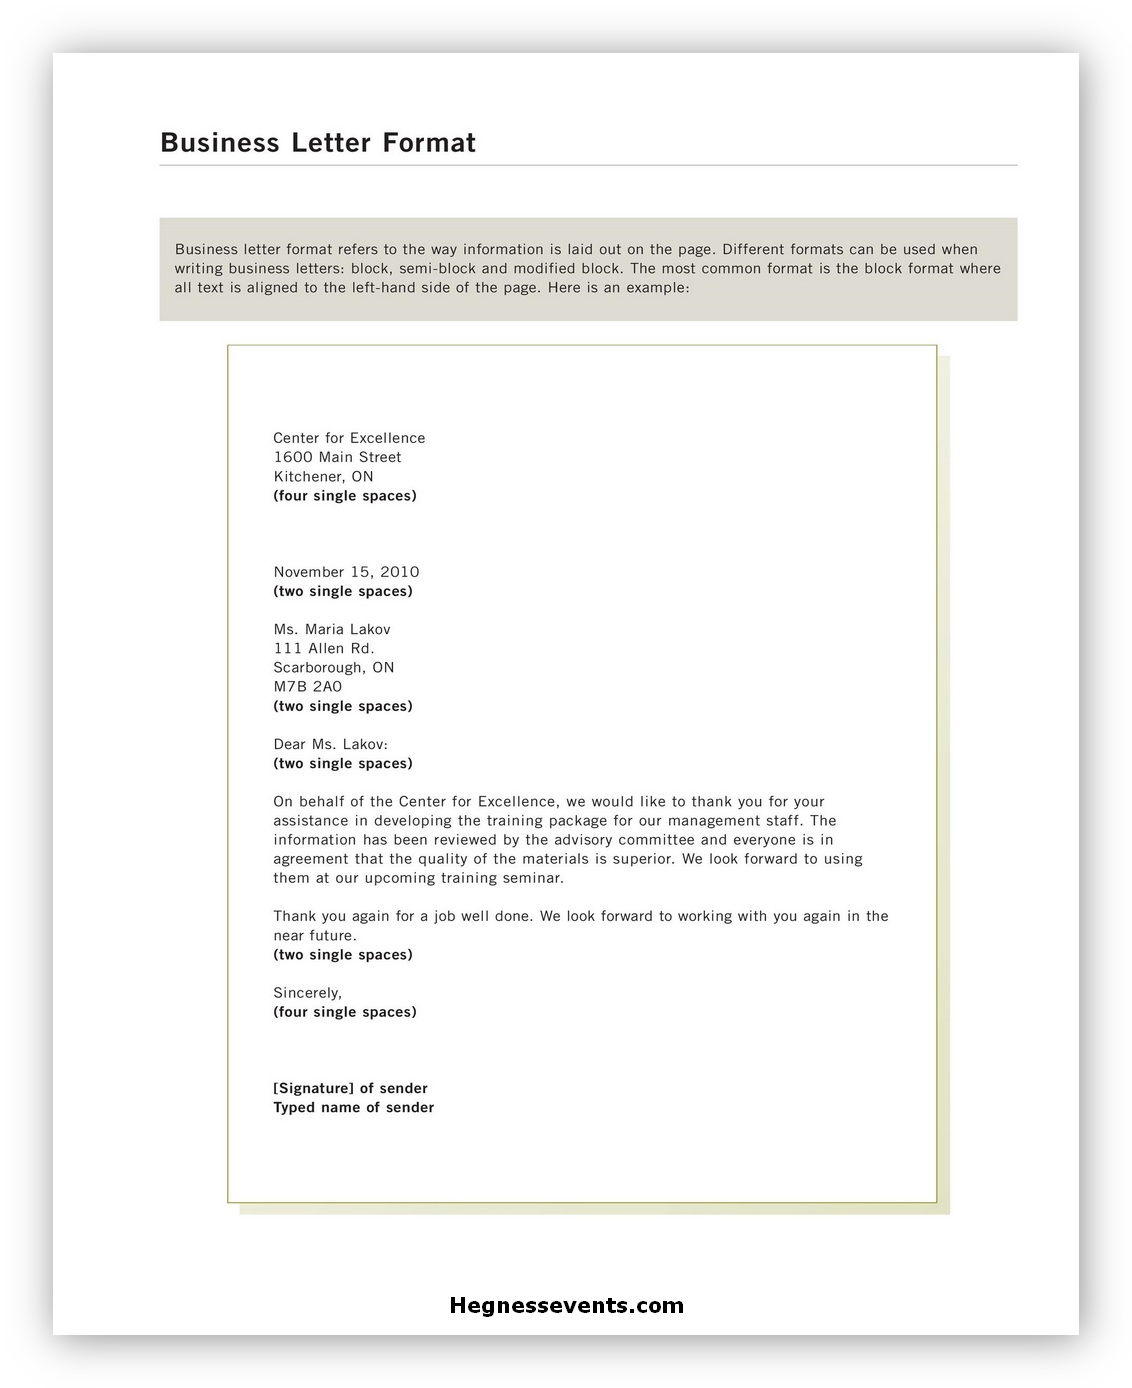 Business letter Format 07